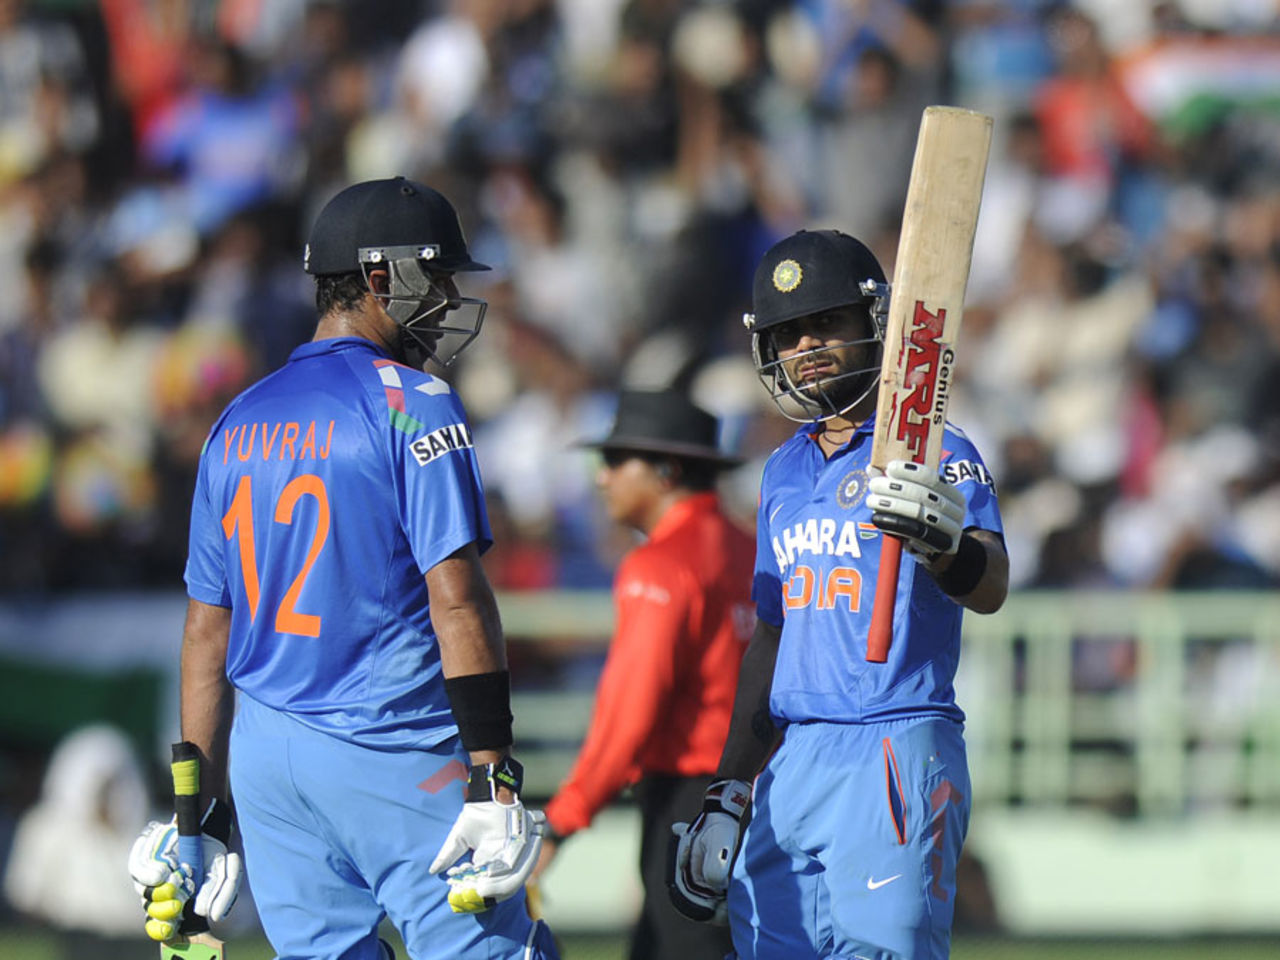 Virat Kohli raises the bat after scoring fifty, India v West Indies, 2nd ODI, Visakhapatnam, November 24, 2013